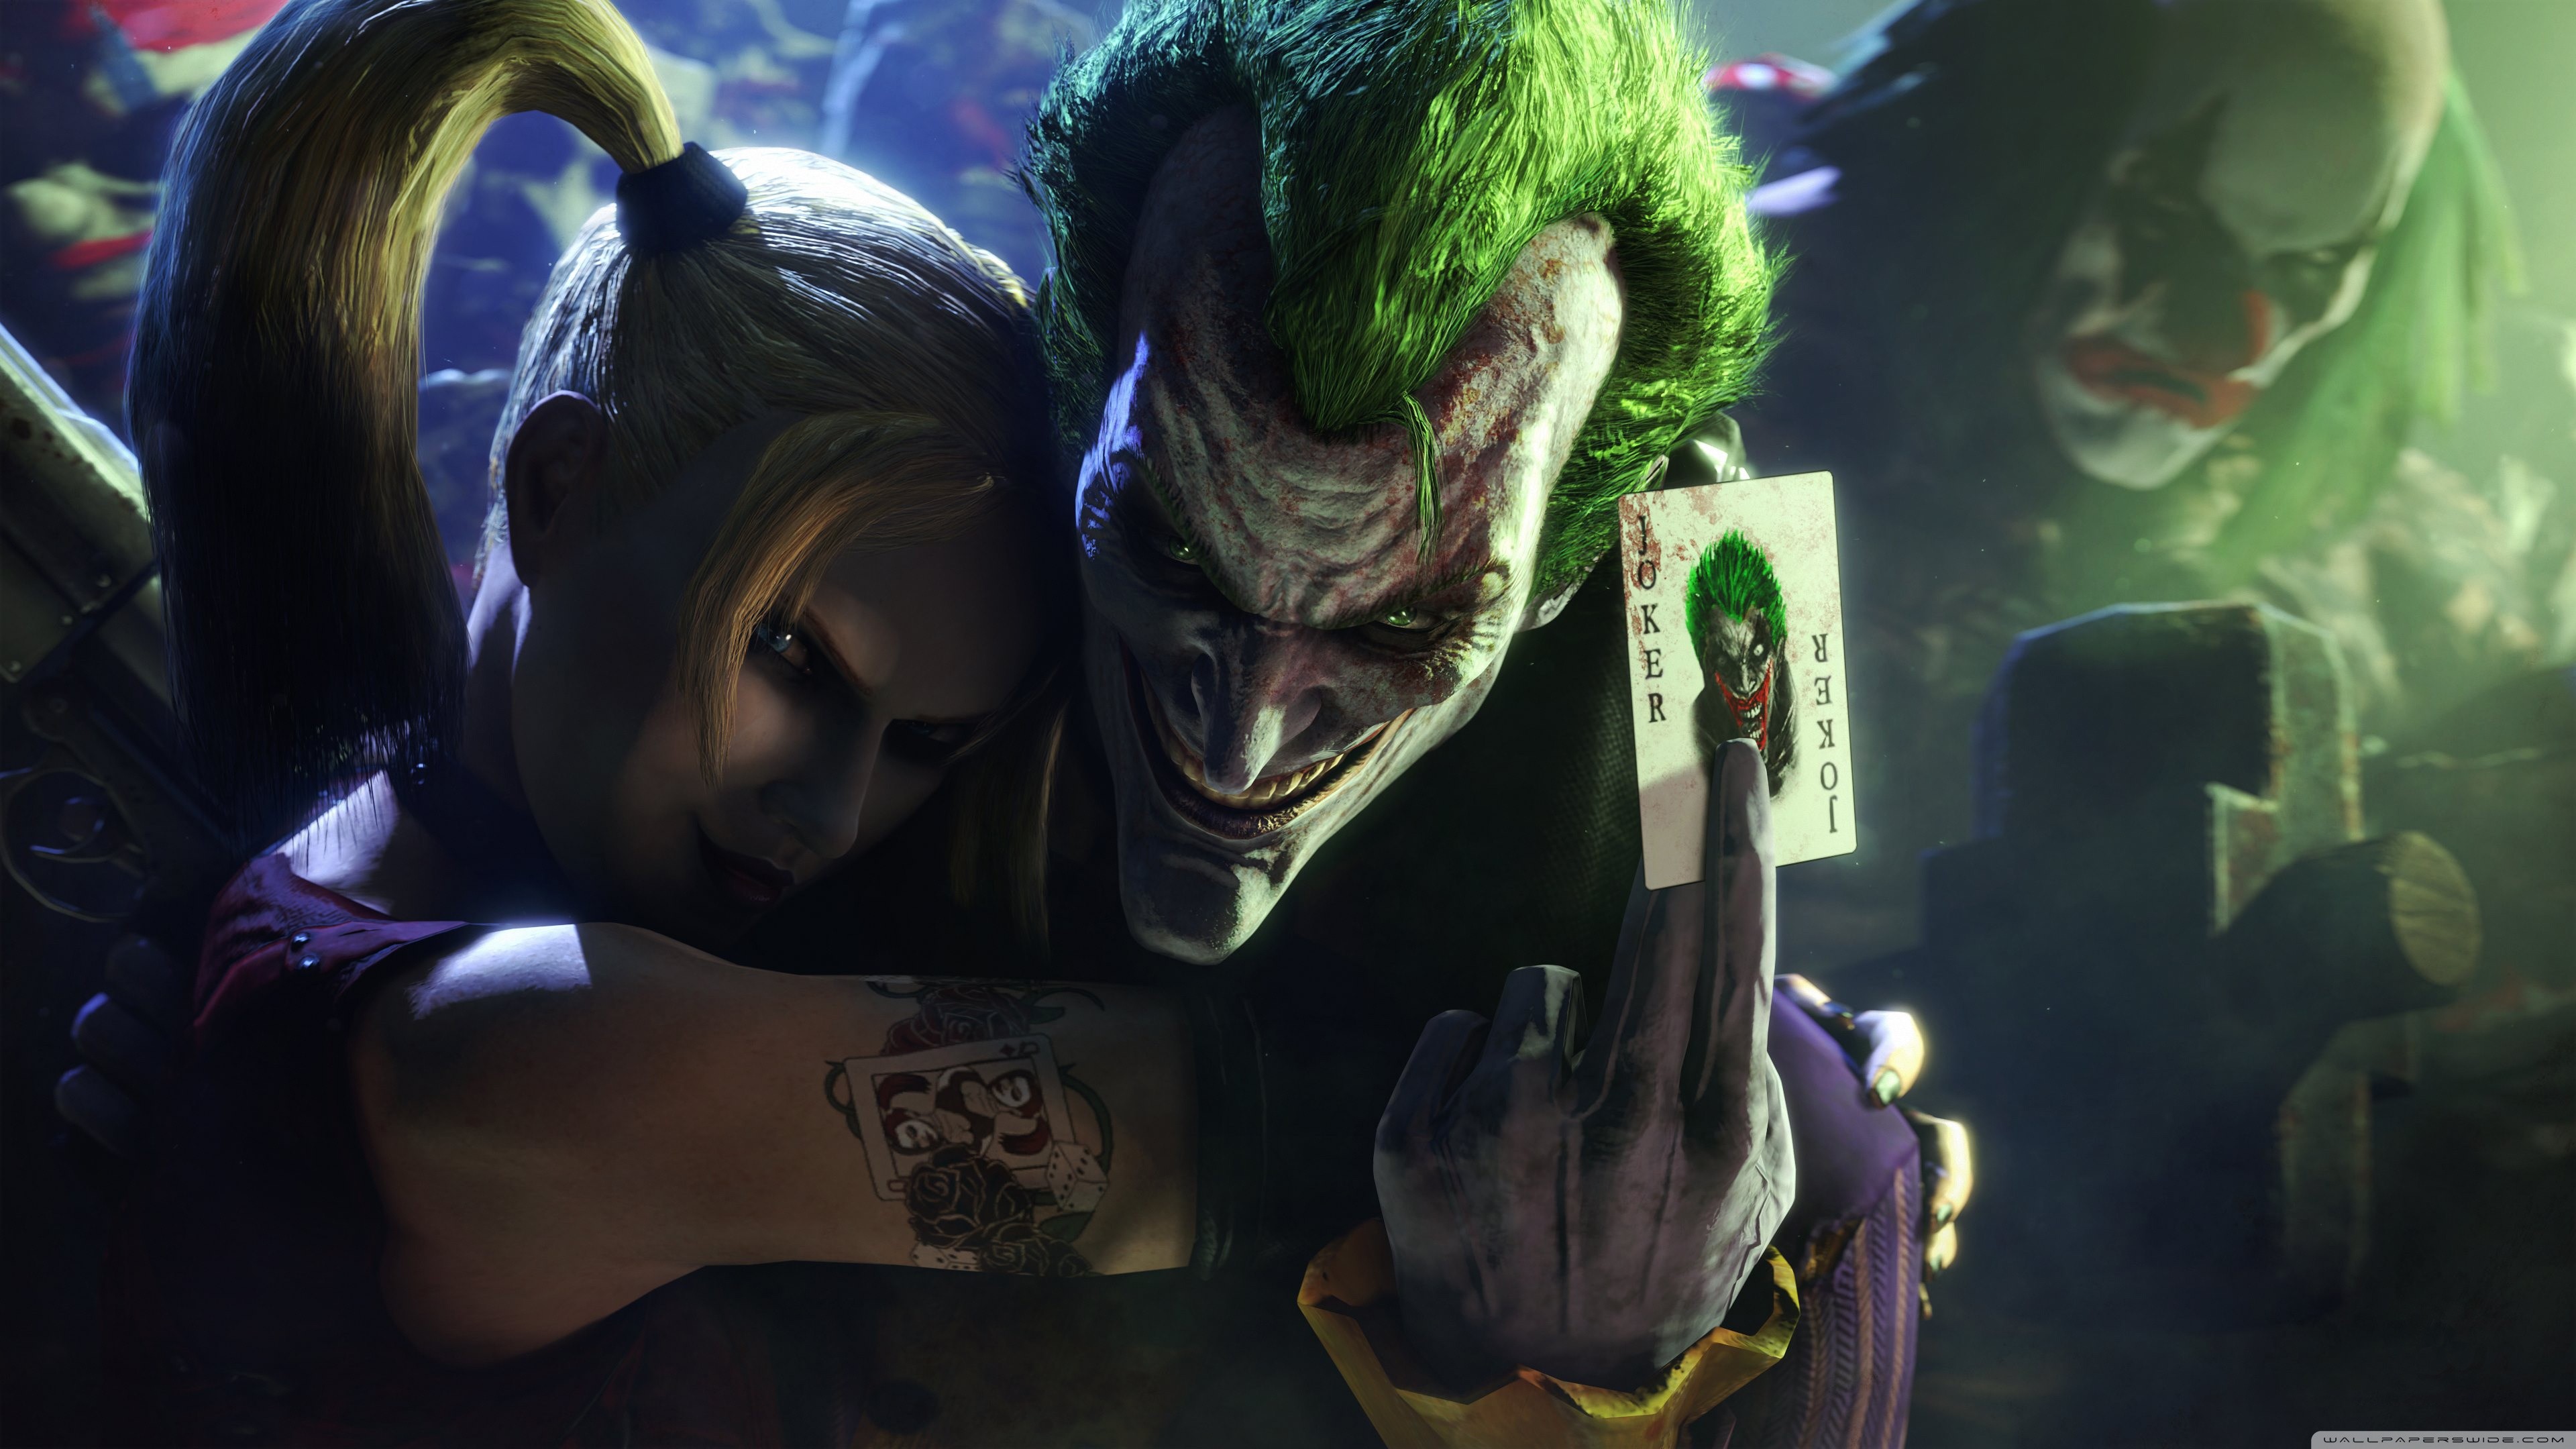 Batman Joker and Harley Quinn